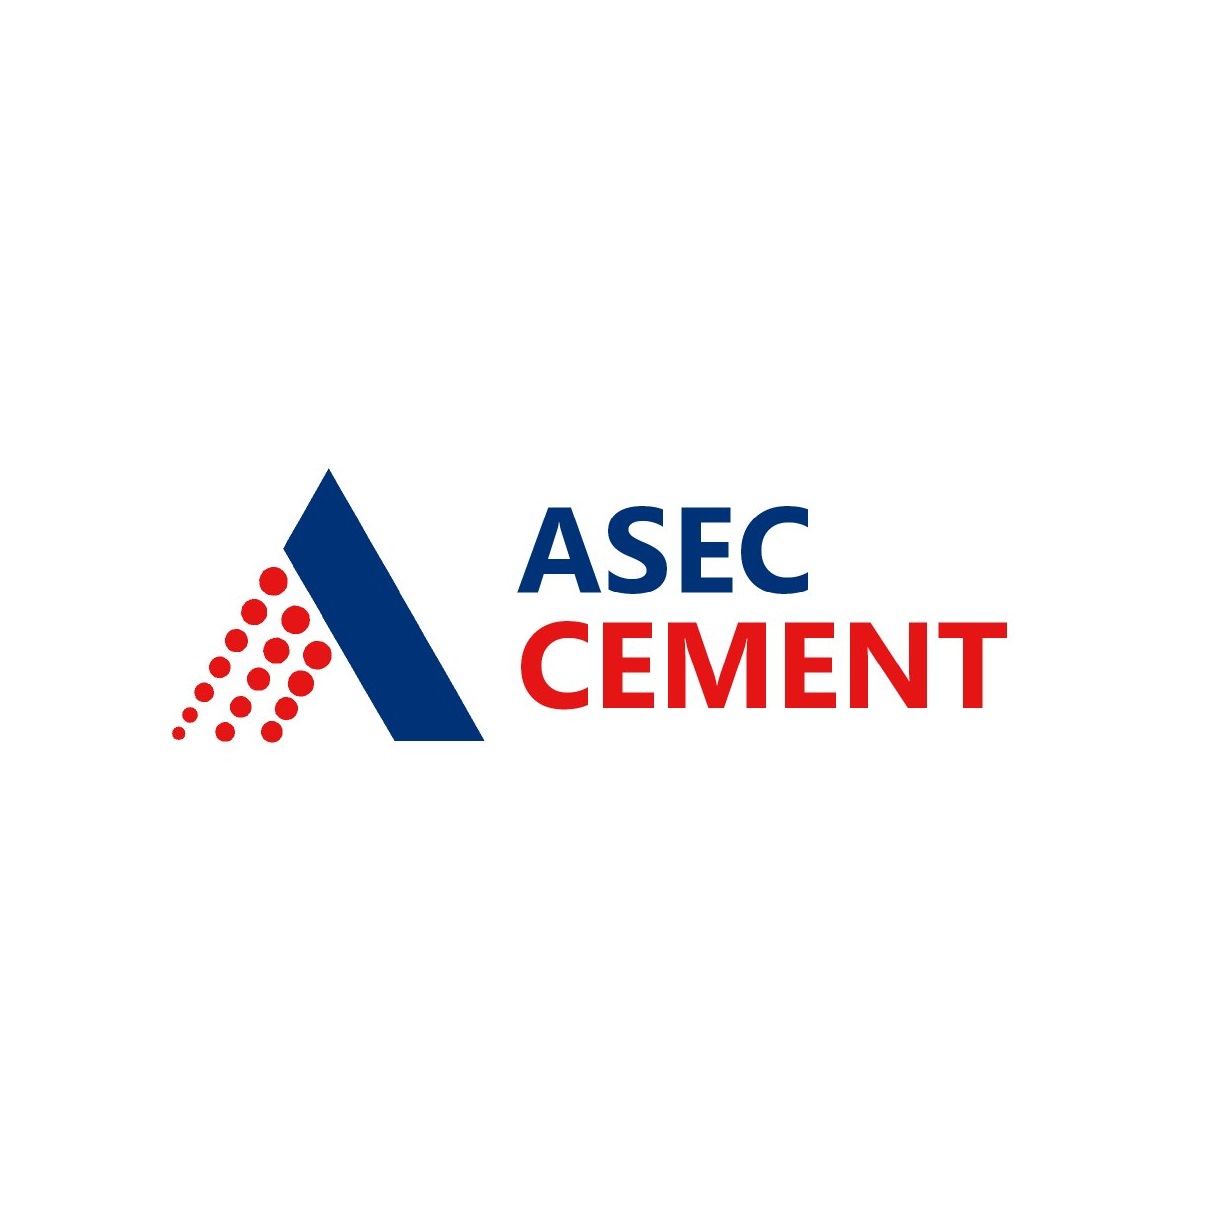 ASEC Cement